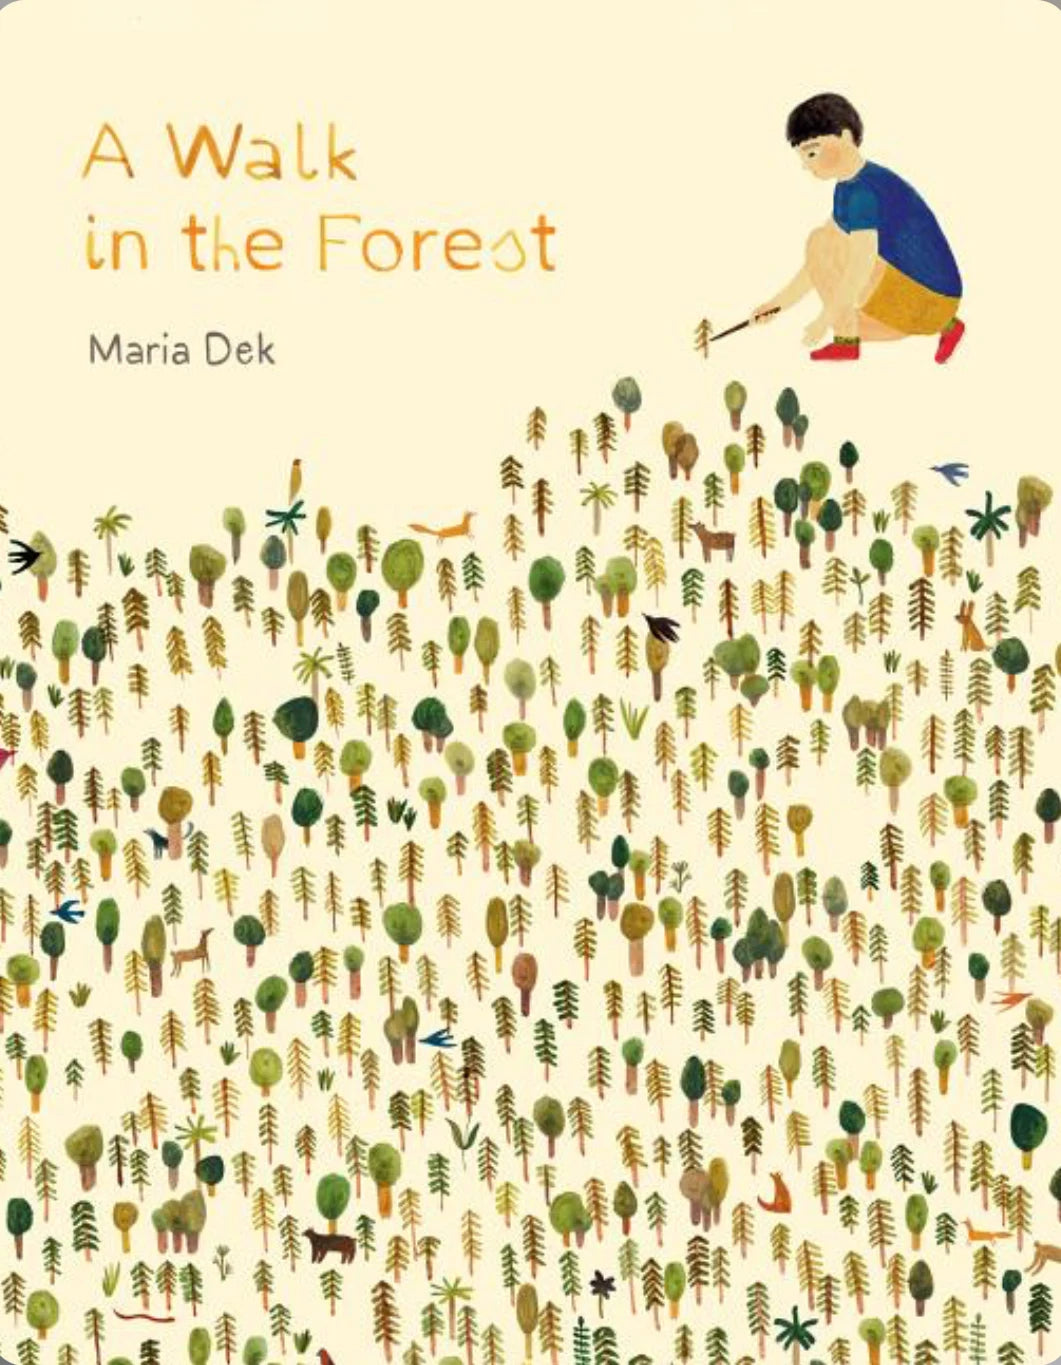 A Walk in the Forest by Maria Dek - Alder & Alouette